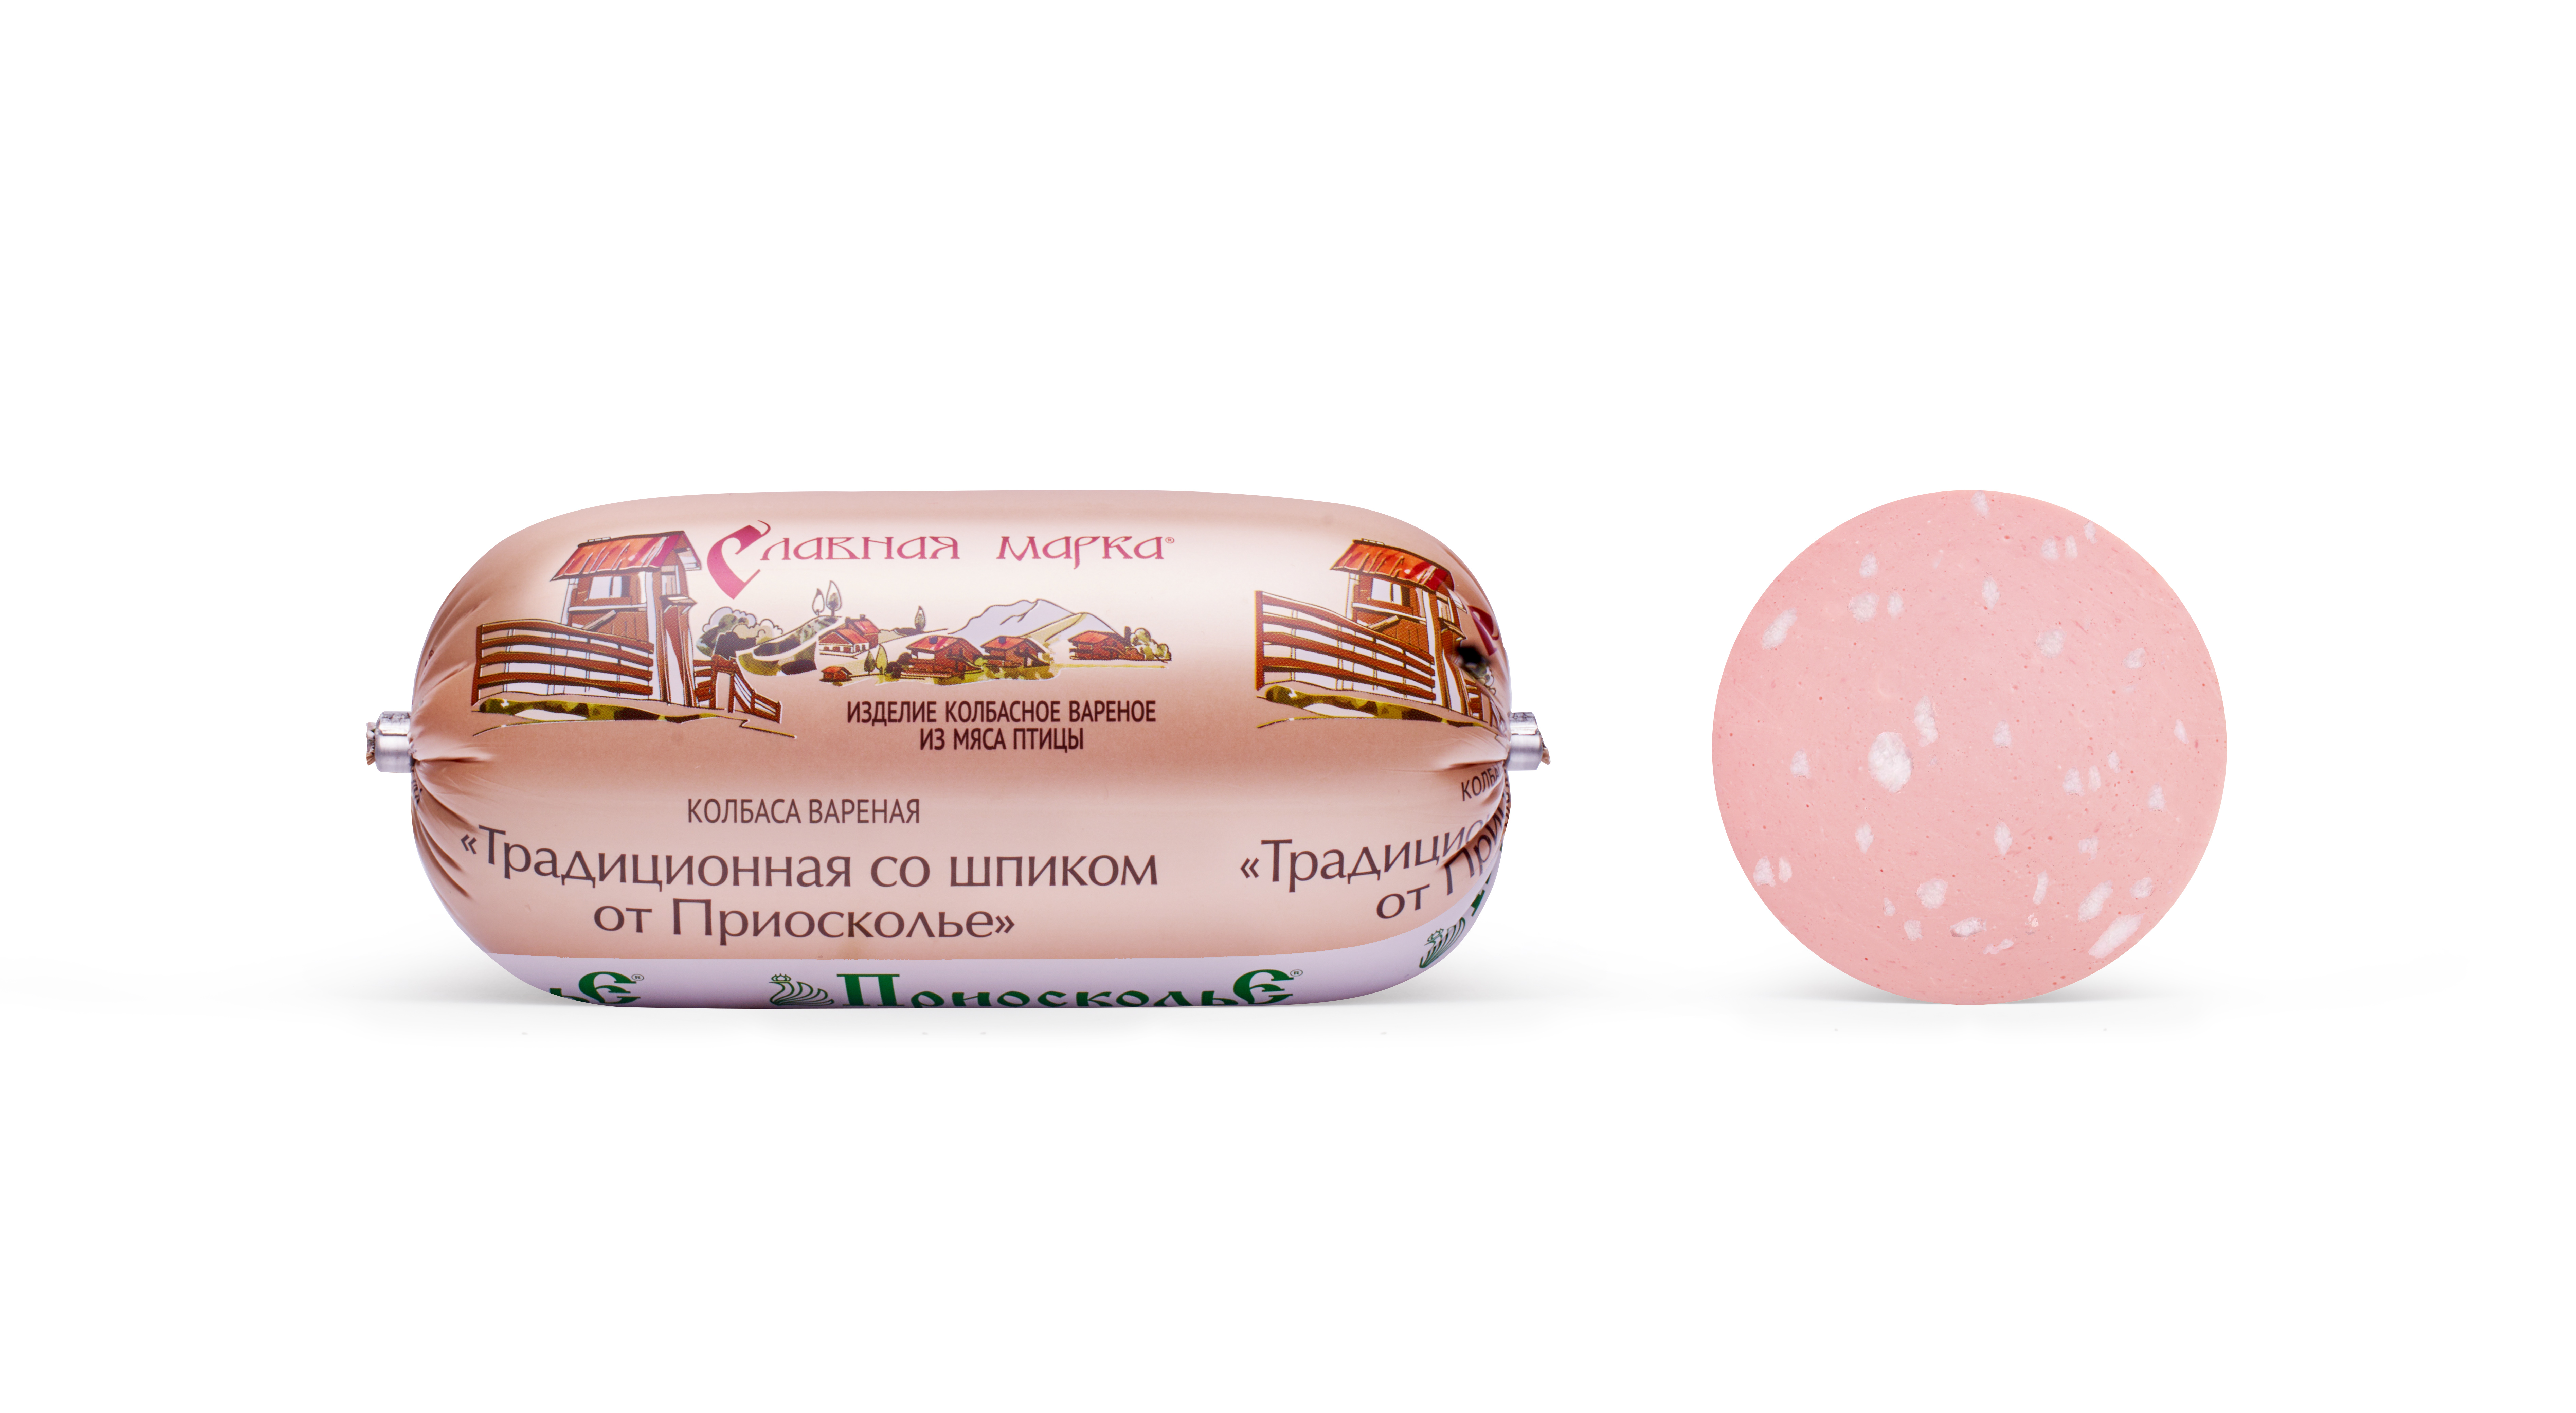 Cooked sausage «Traditsionnaya so shpikom ot Prioskole»